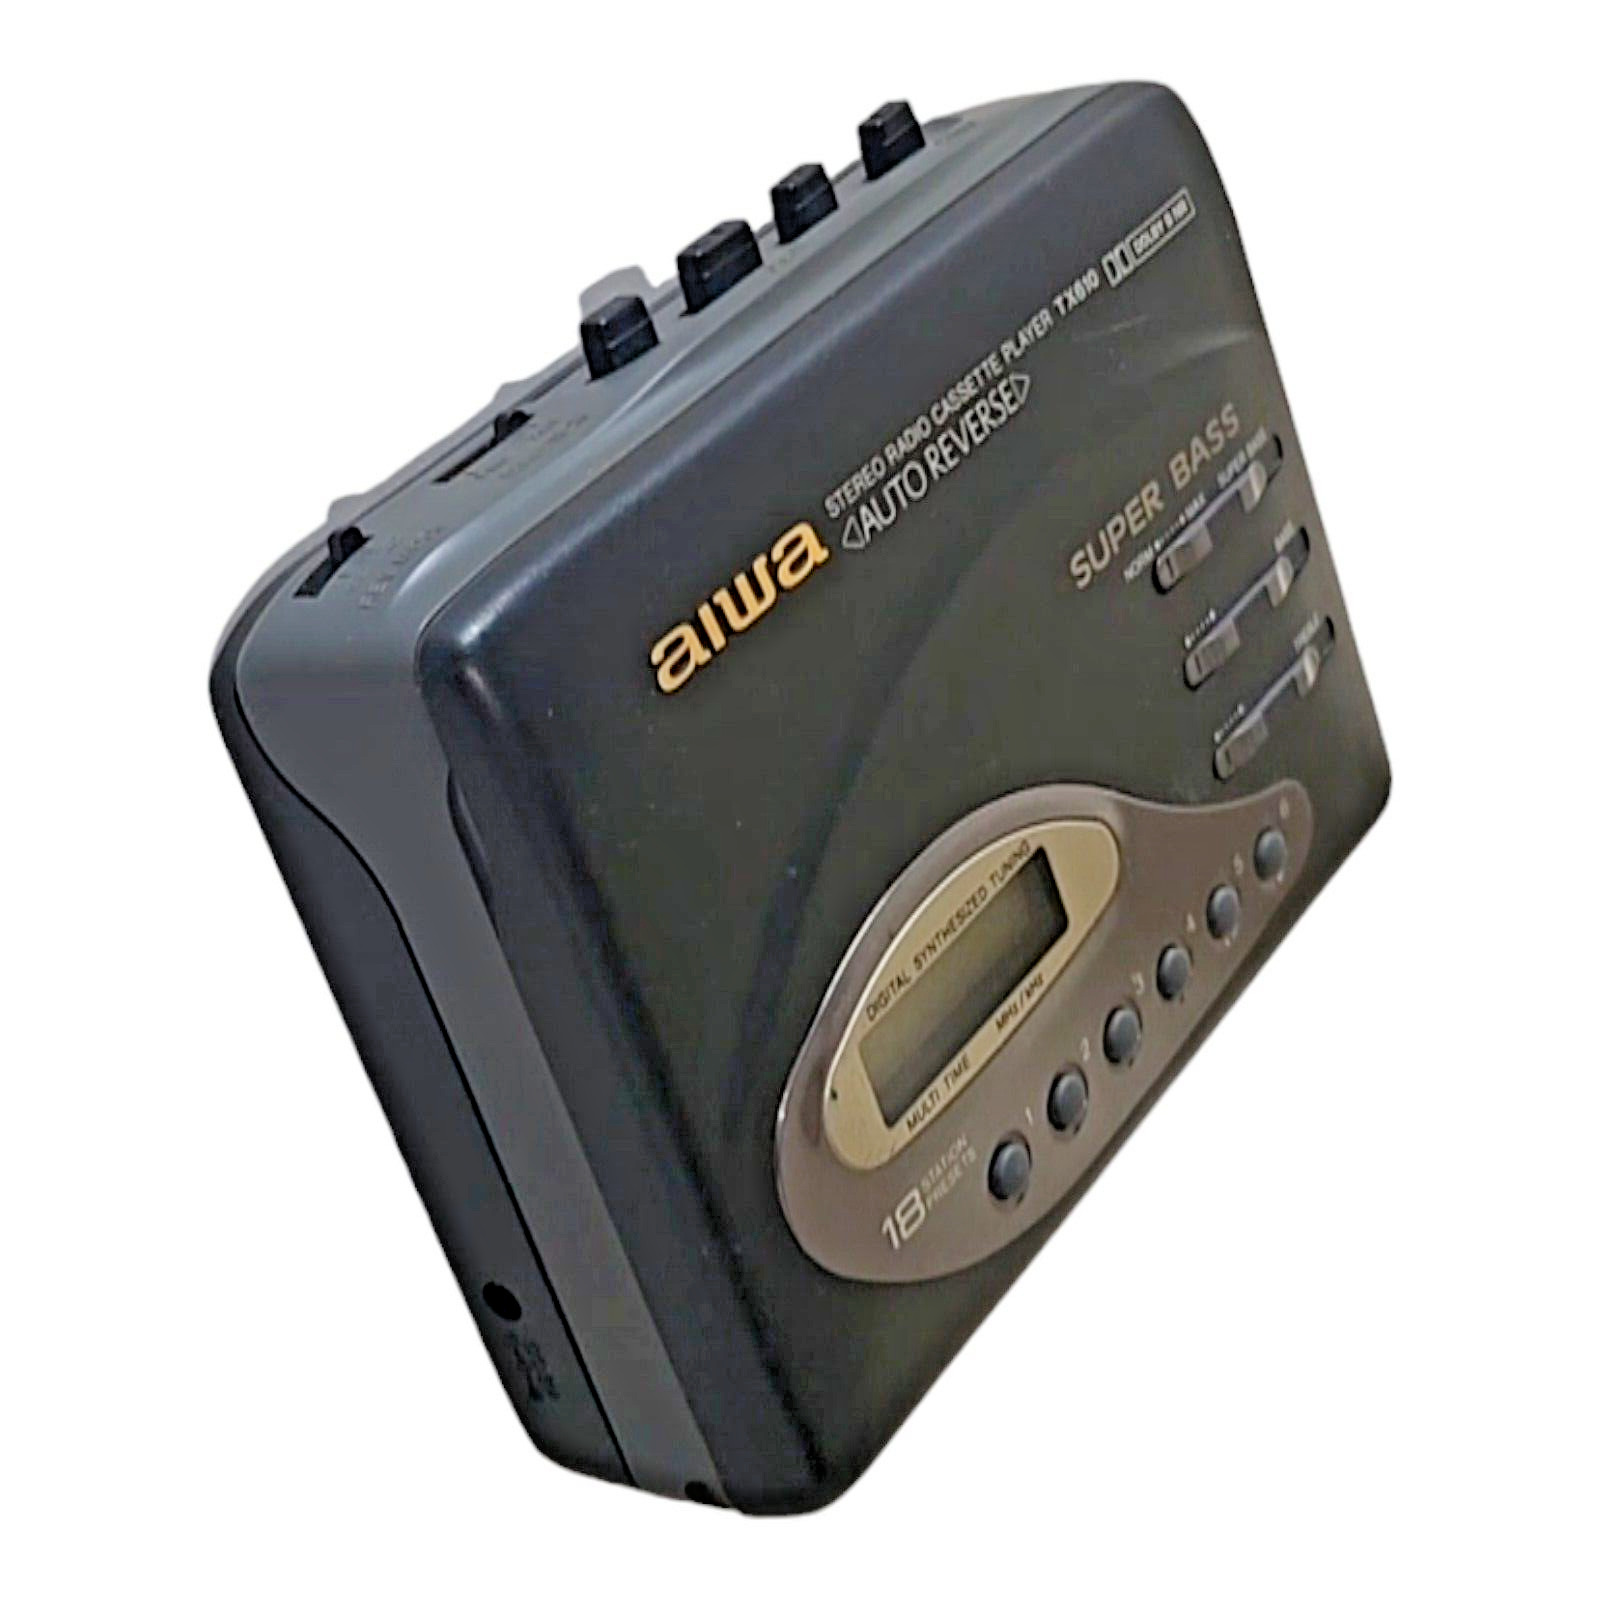 Aiwa TX610 AM/FM Stereo Super Bass Radio Cassette Player HS-TX610 - UNTESTED